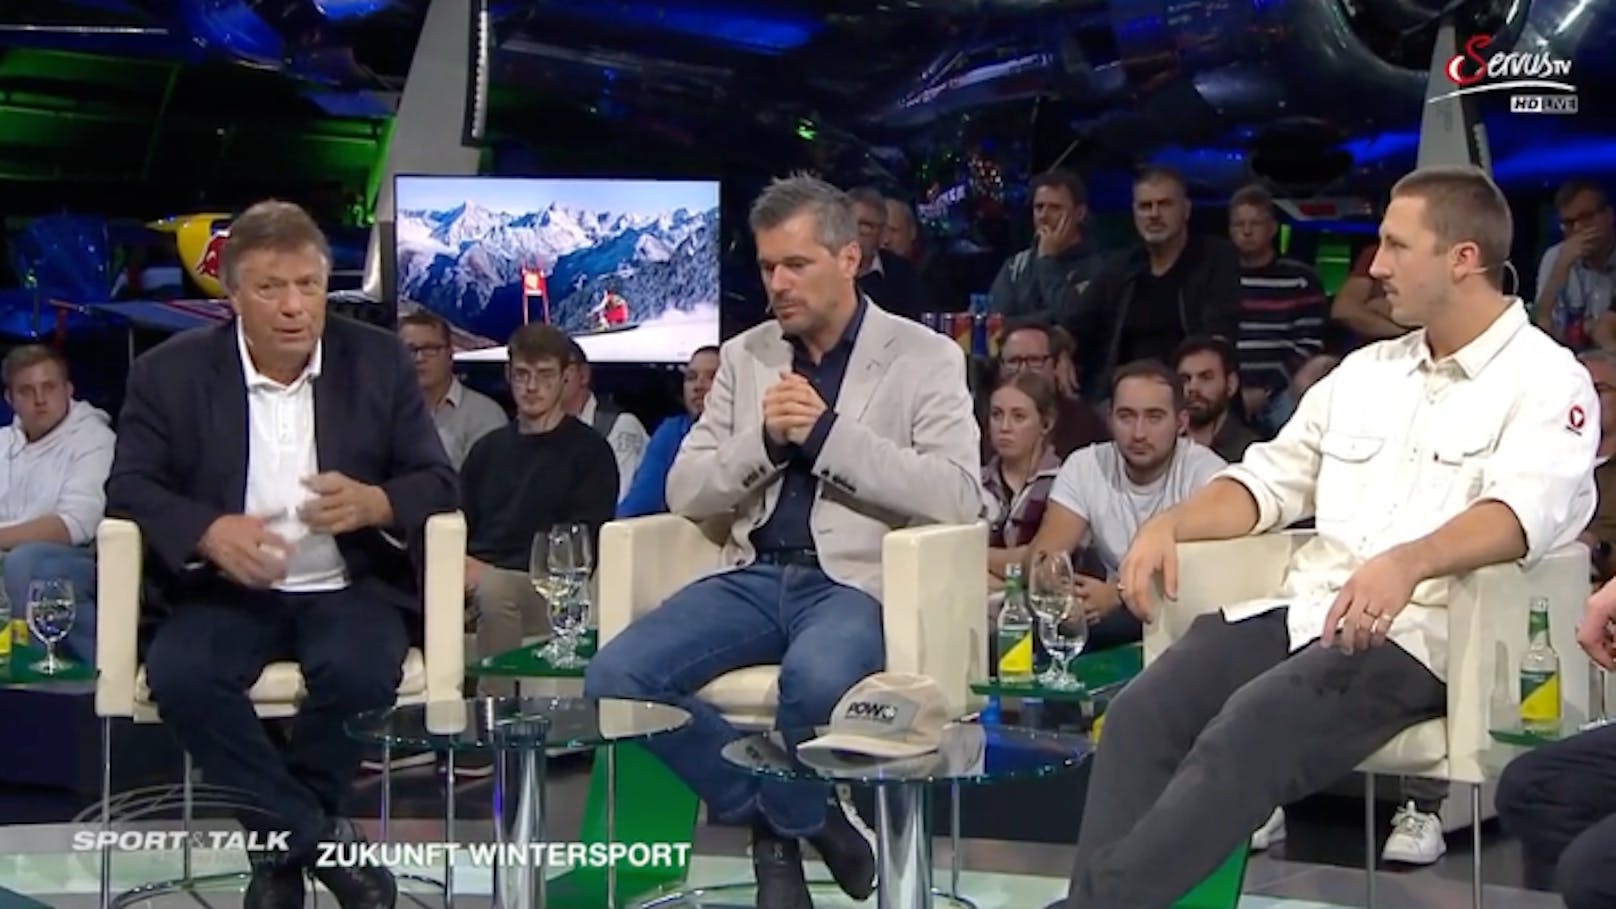 Schröcksnadel gegen ORF! "Skisport wird diskriminiert"